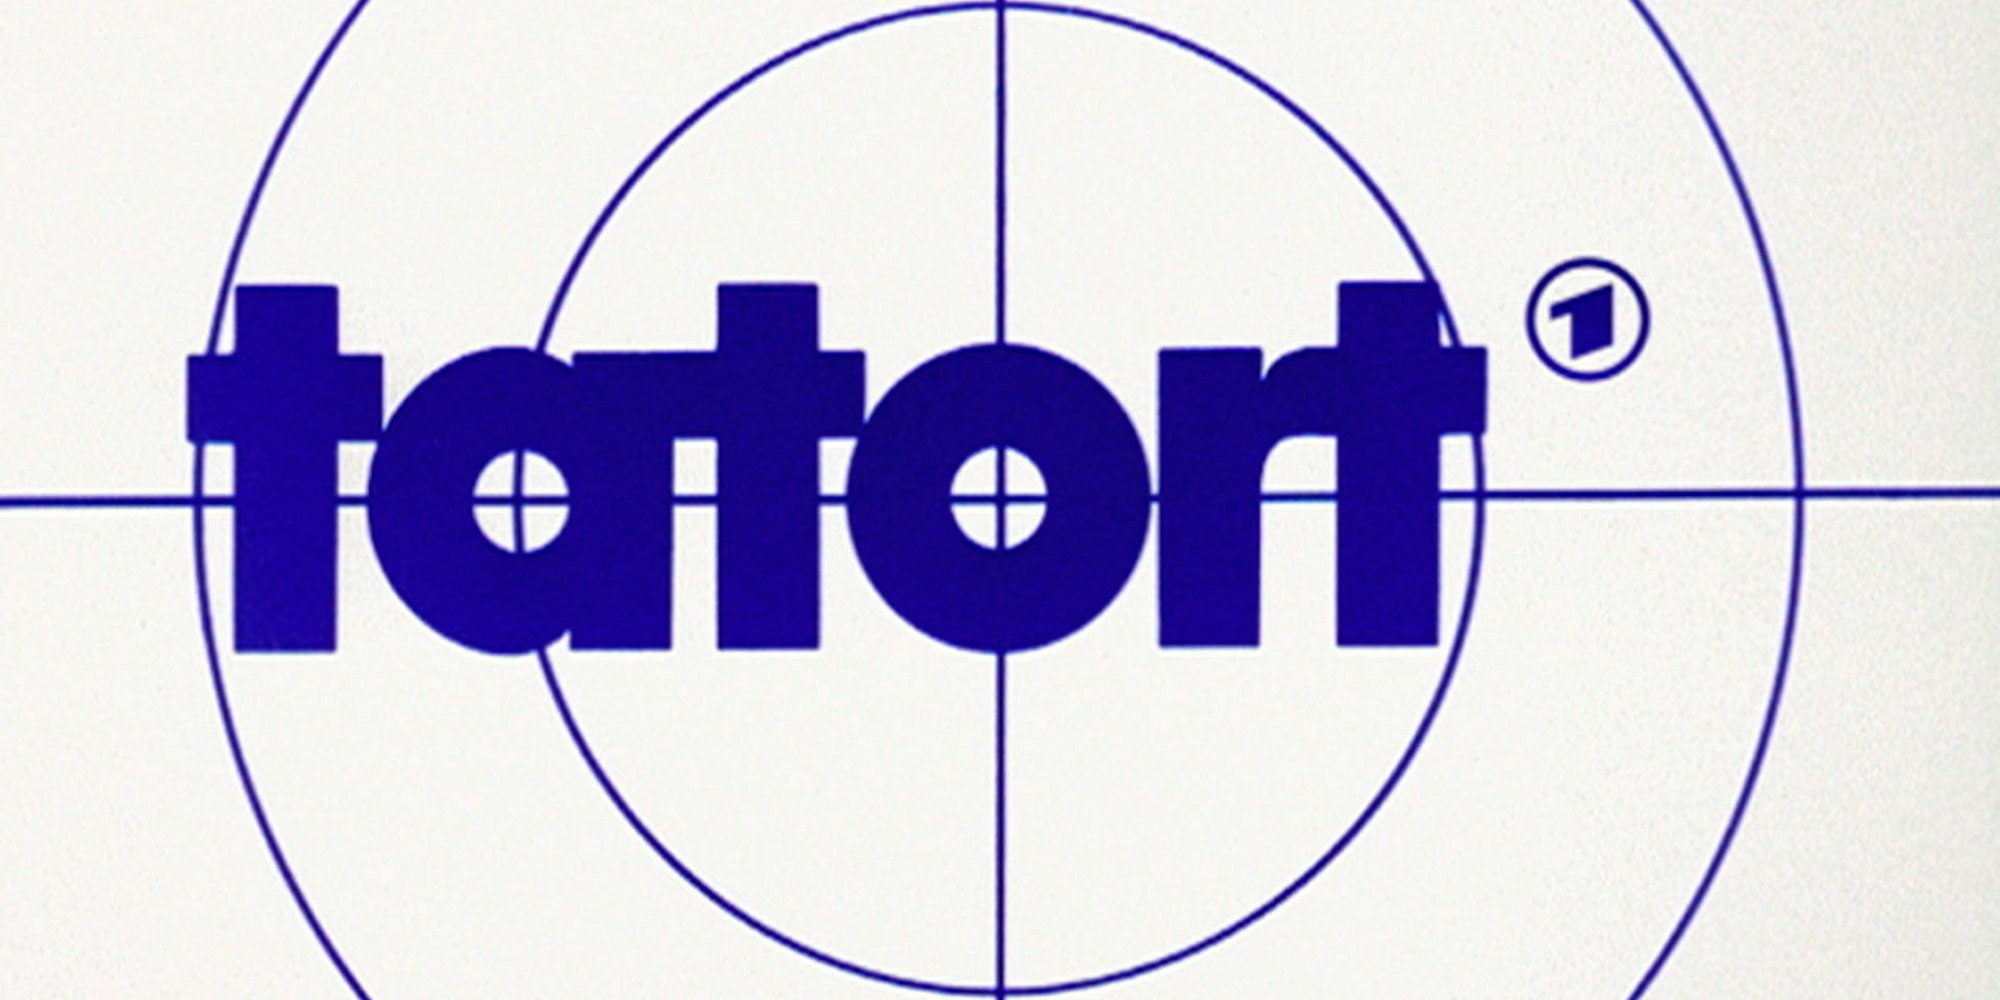 Tatort Logo